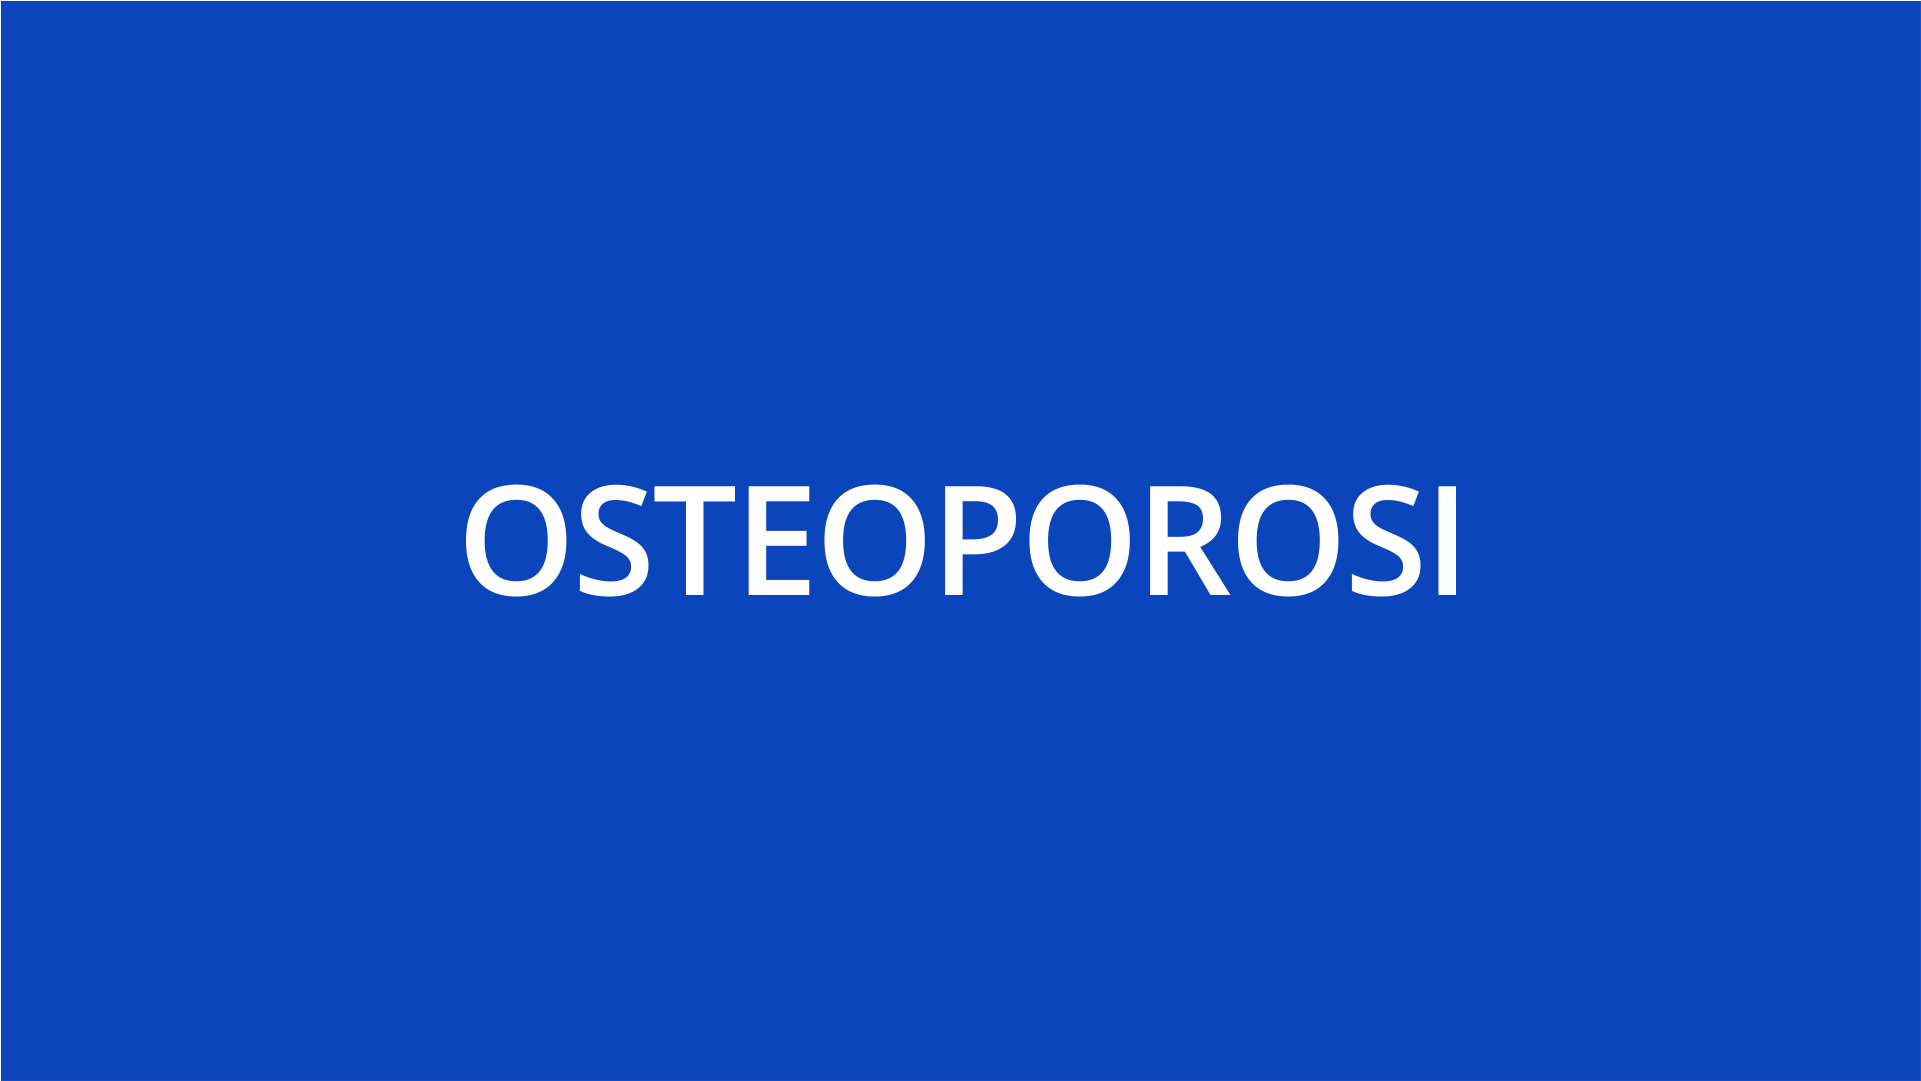 fisioterapia ughetta piacenza - osteoporosi